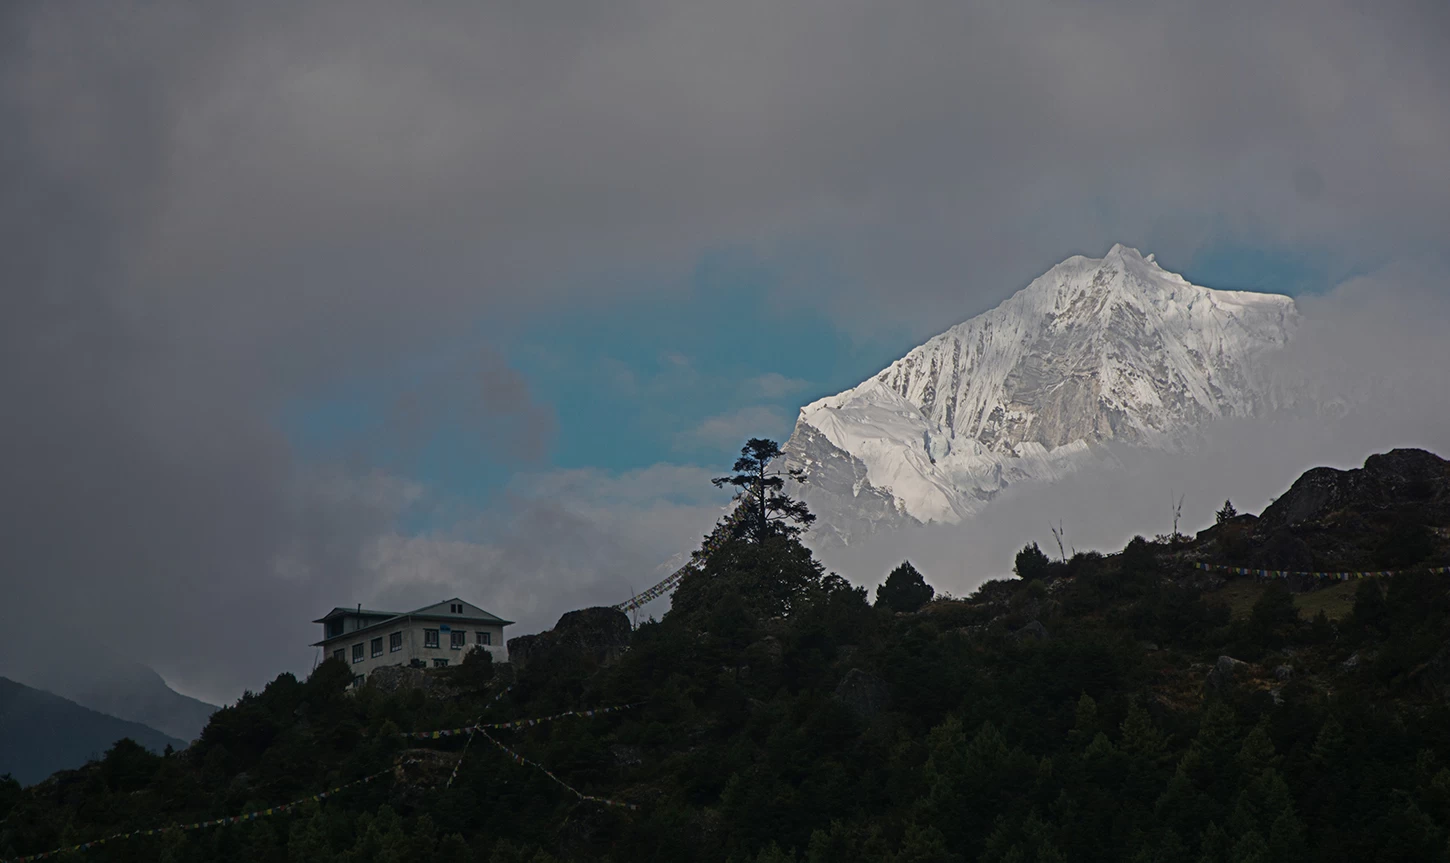  Everest Panorama Trek, Nepal 